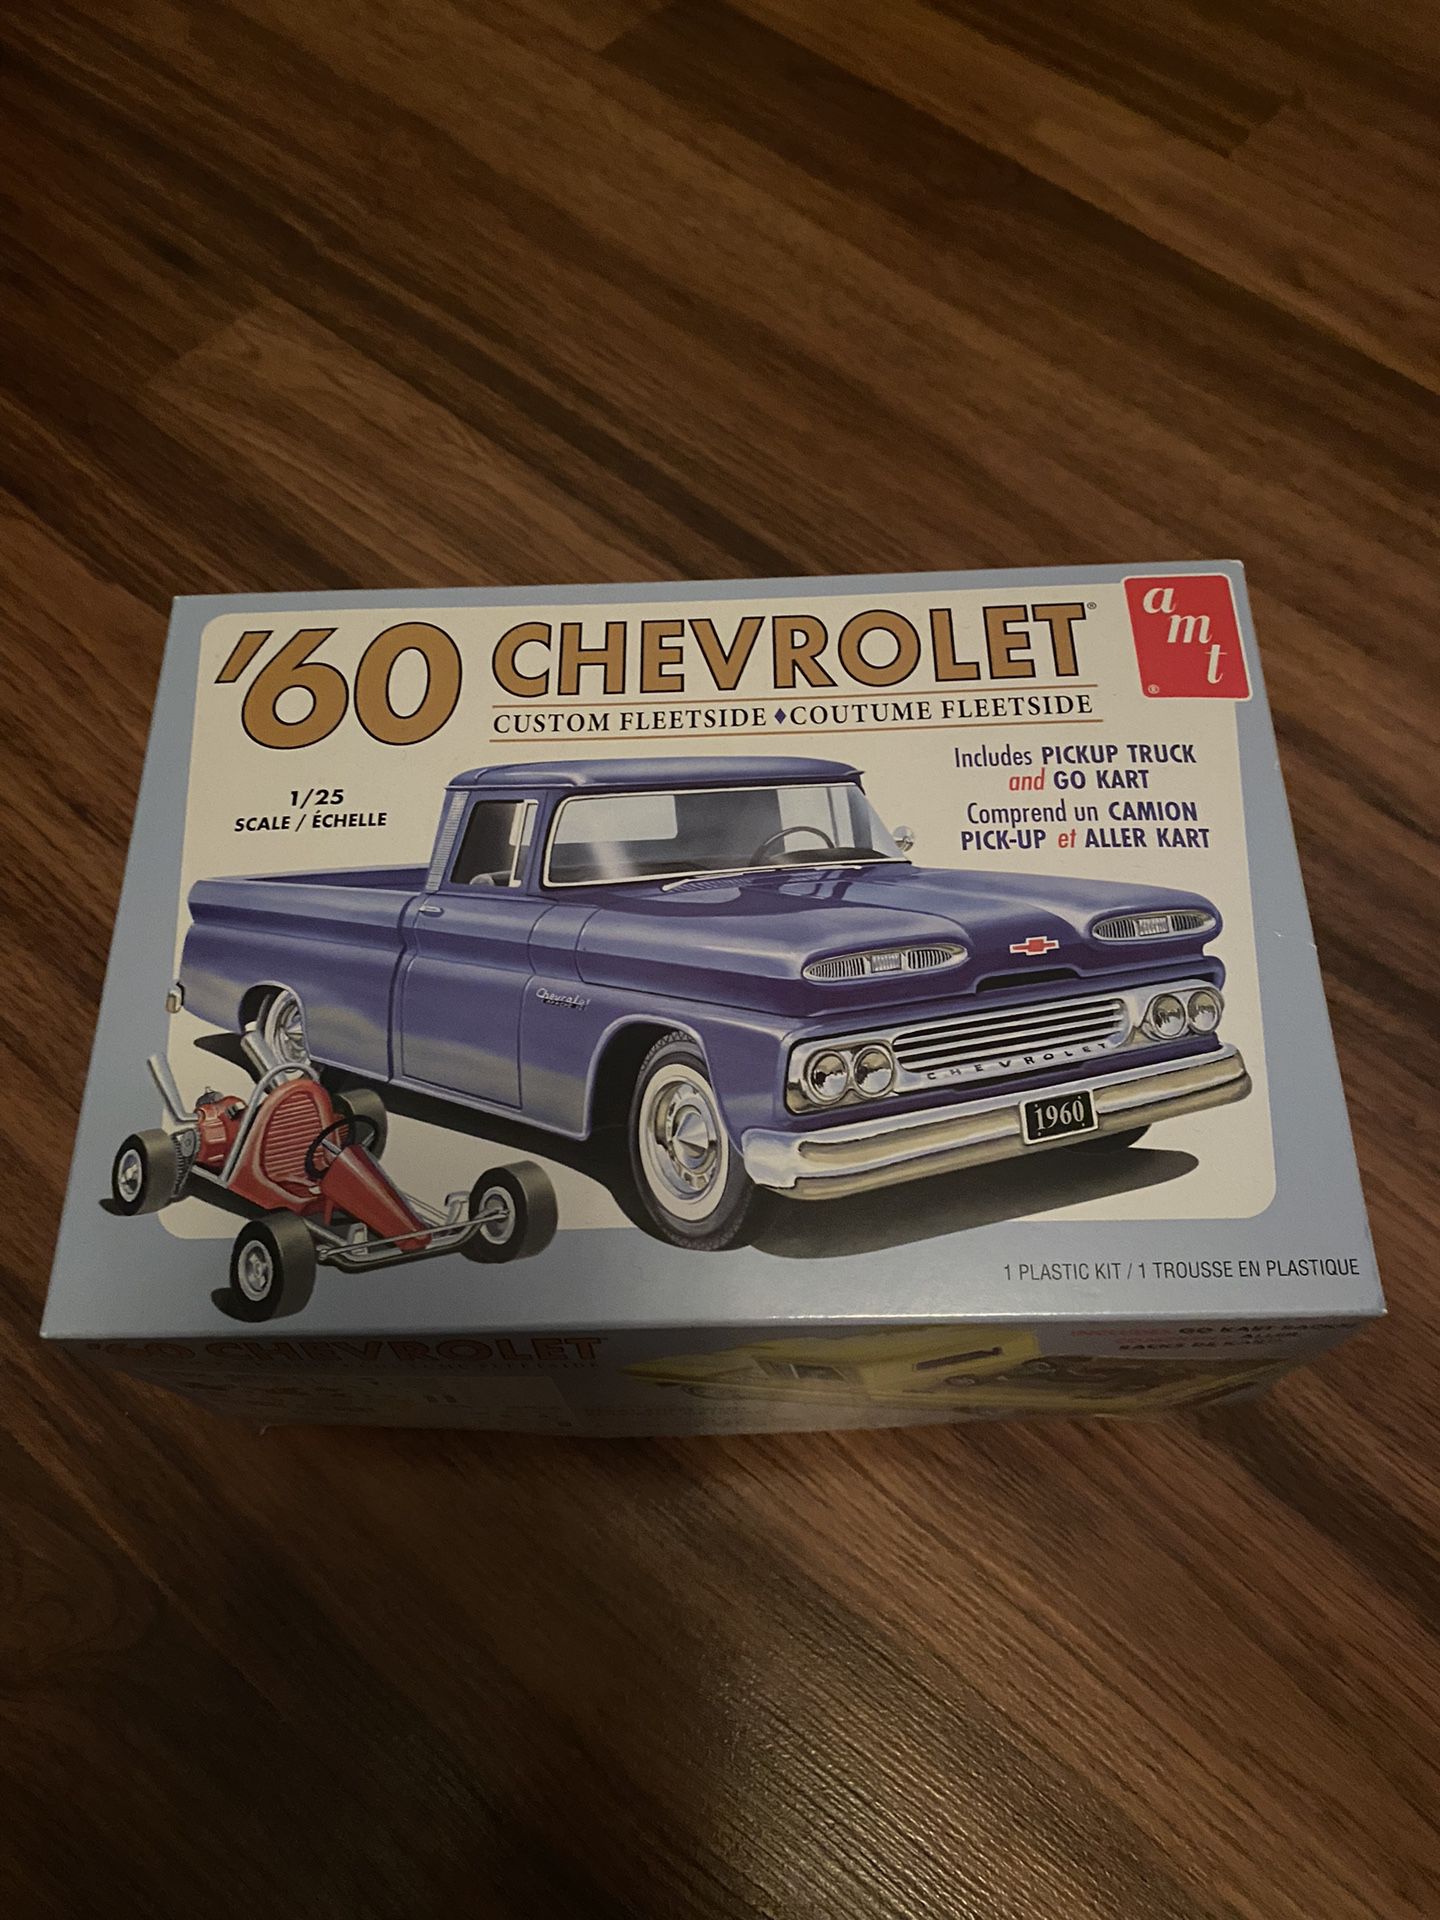 ‘60 Chevrolet Truck 1/25 Scale Model